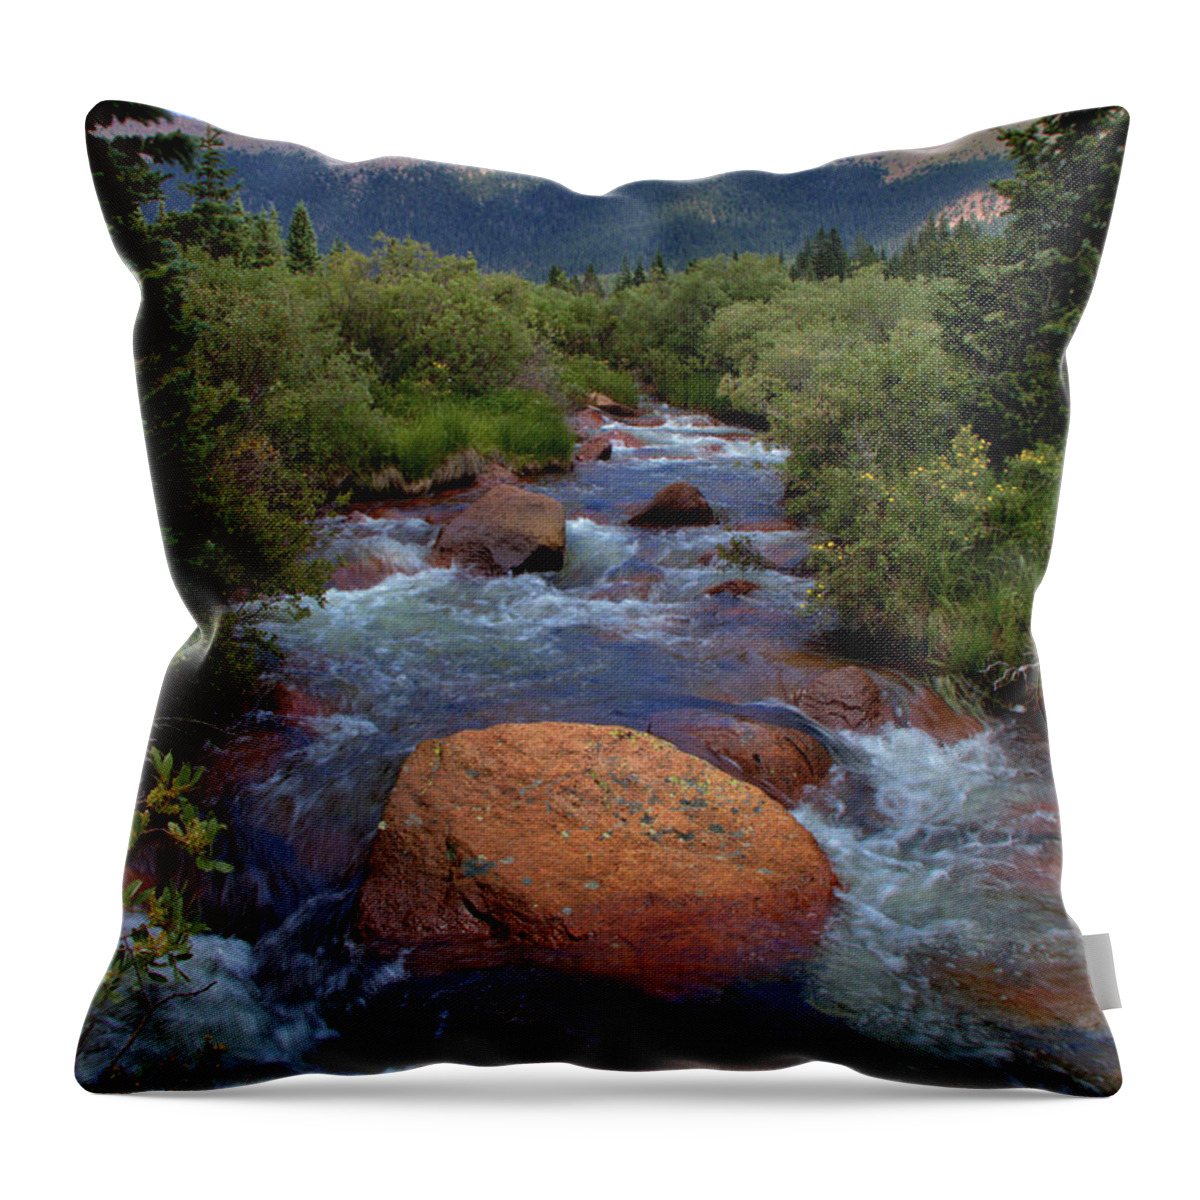 Mountains Throw Pillow featuring the photograph Mountain Creek by Bob Falcone